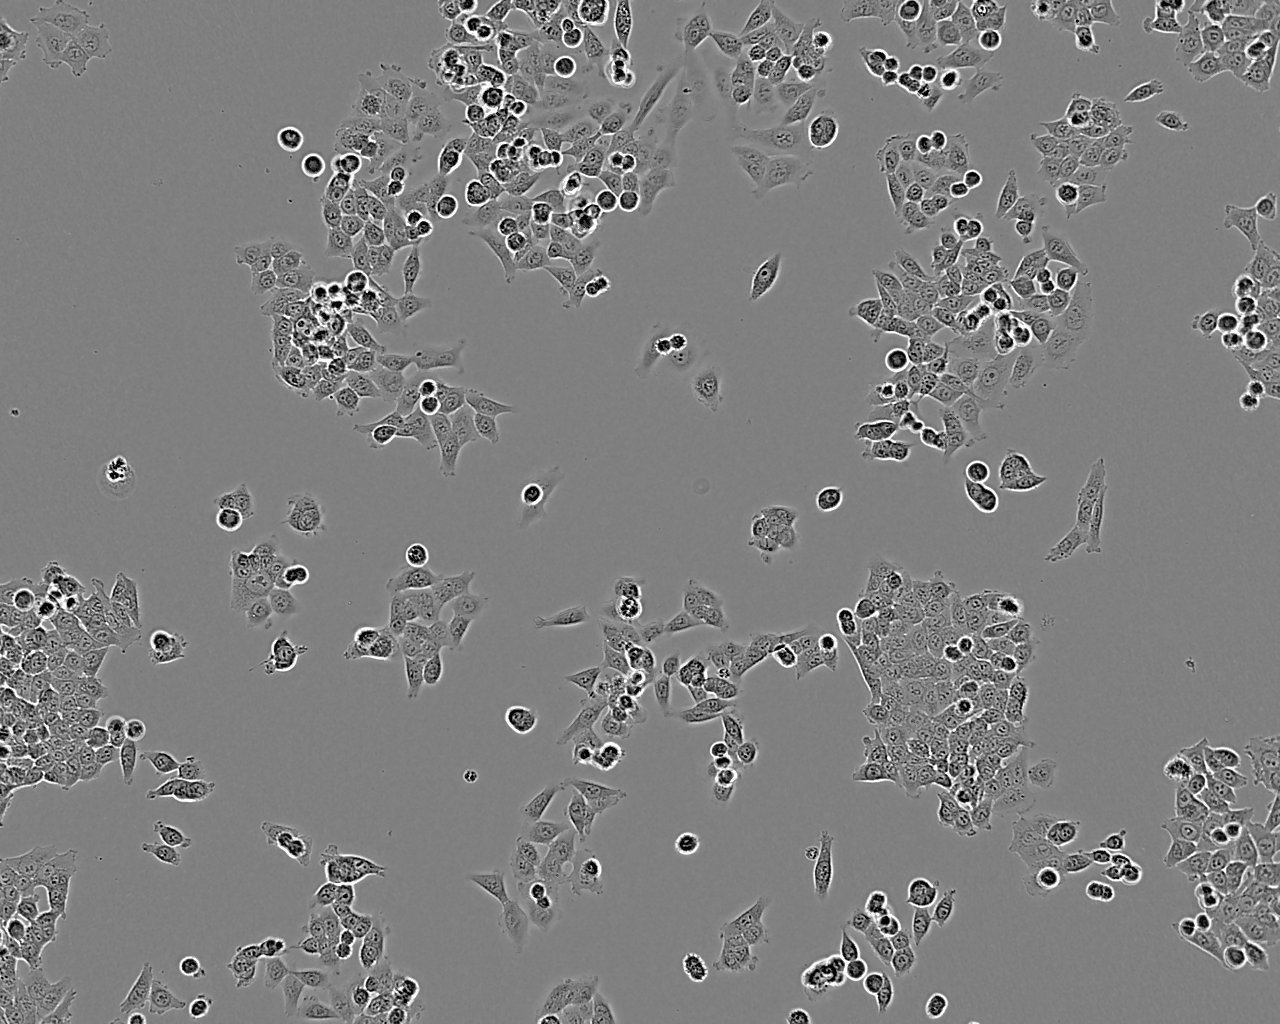 NCI-H929 Cell:人浆细胞白血病细胞系,NCI-H929 Cell